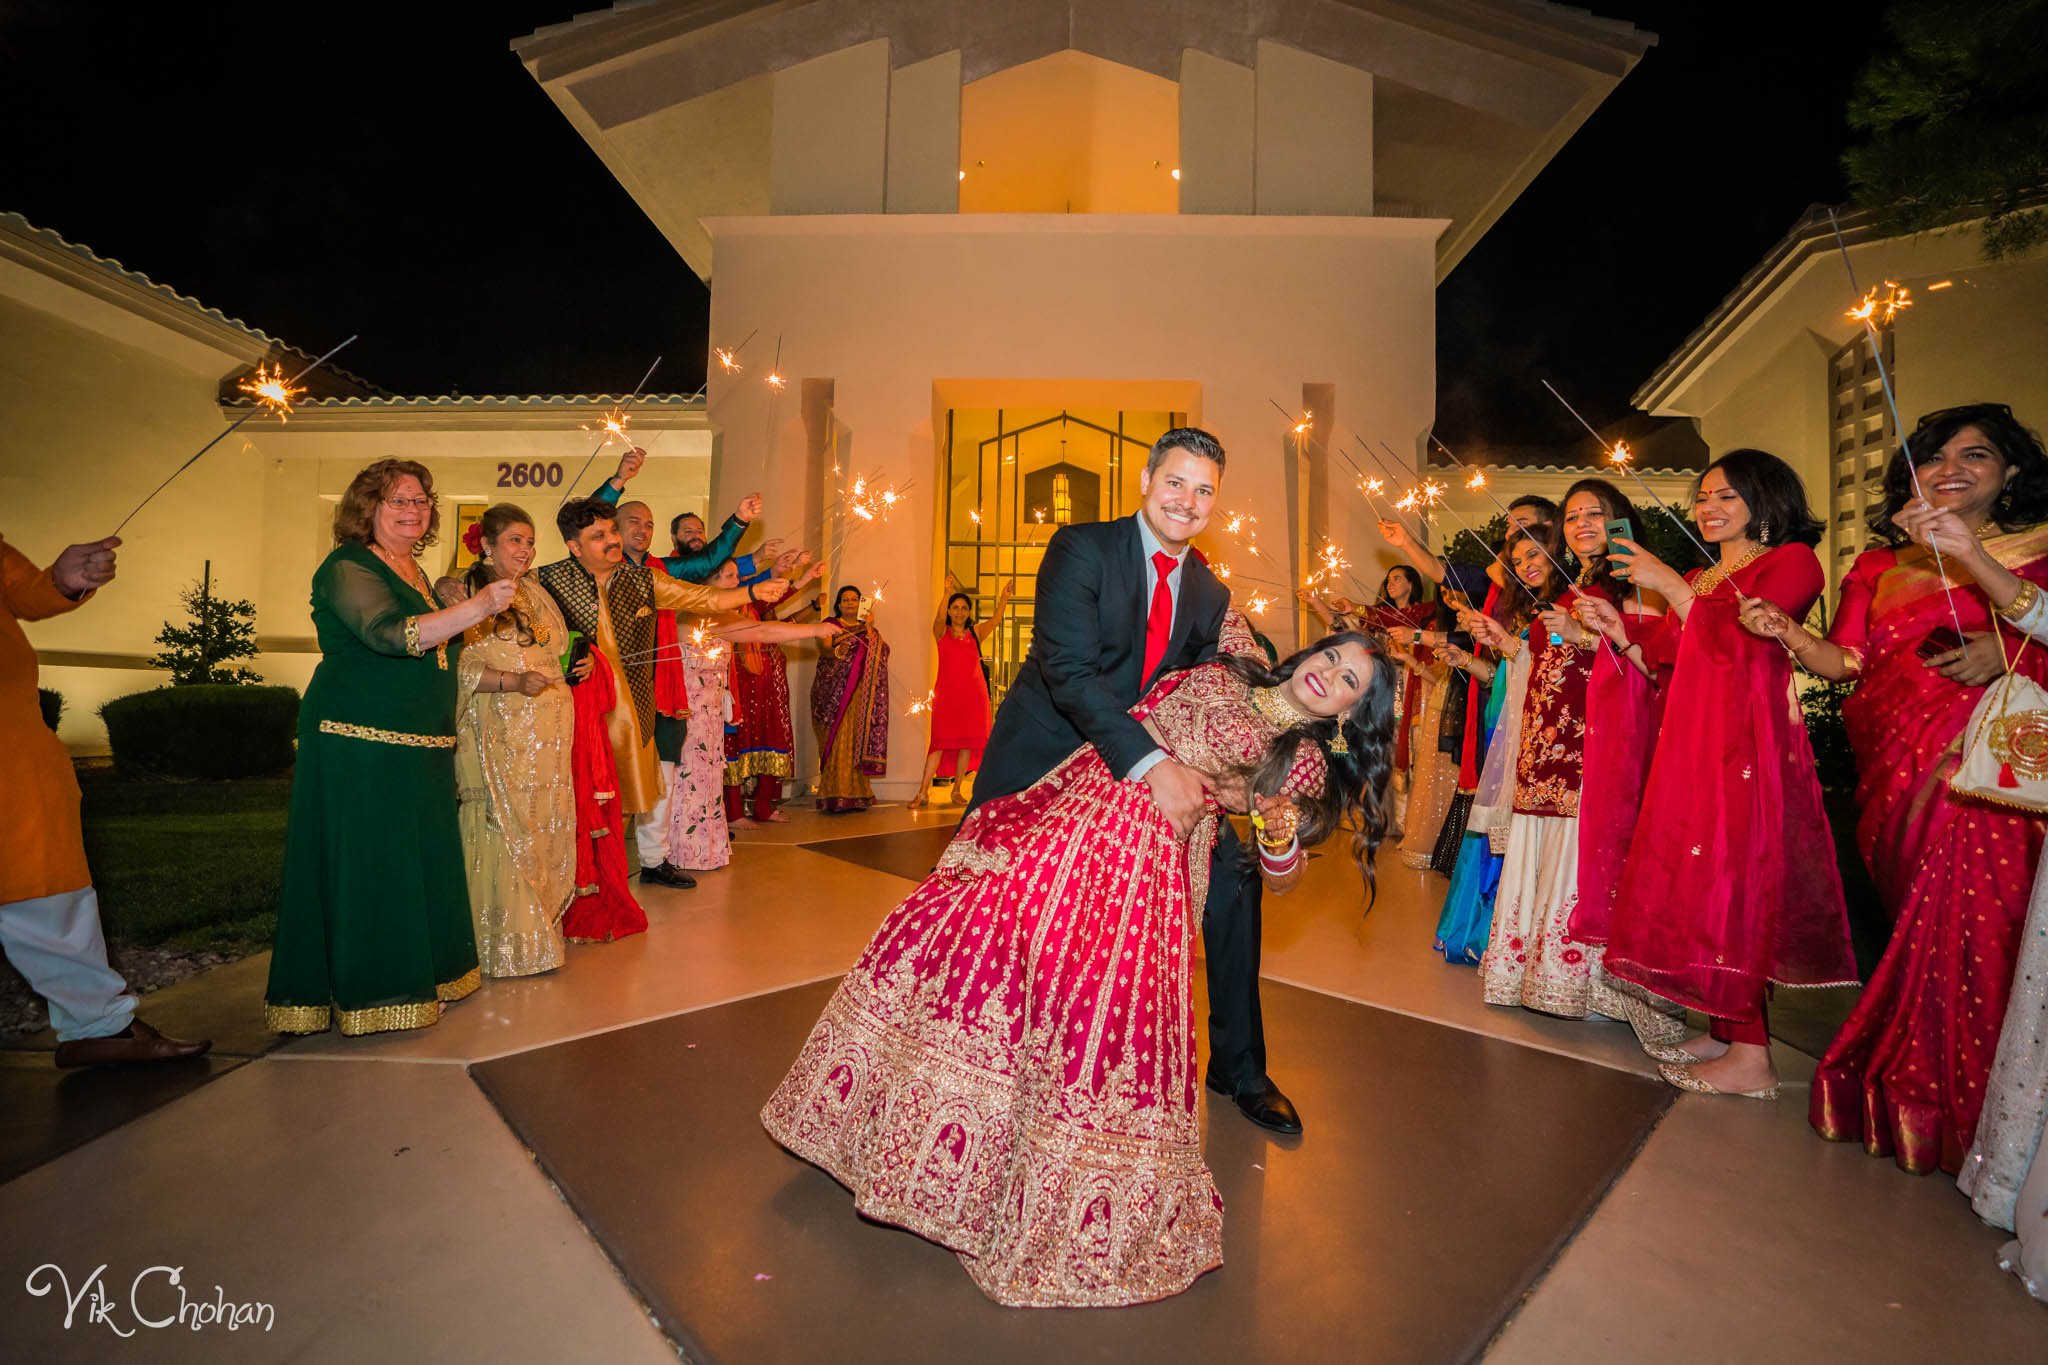 2022-06-09-Annie-&-Steven-Las-Vegas-Indian-Wedding-Ceremony-Photography-Vik-Chohan-Photography-Photo-Booth-Social-Media-VCP-723.jpg